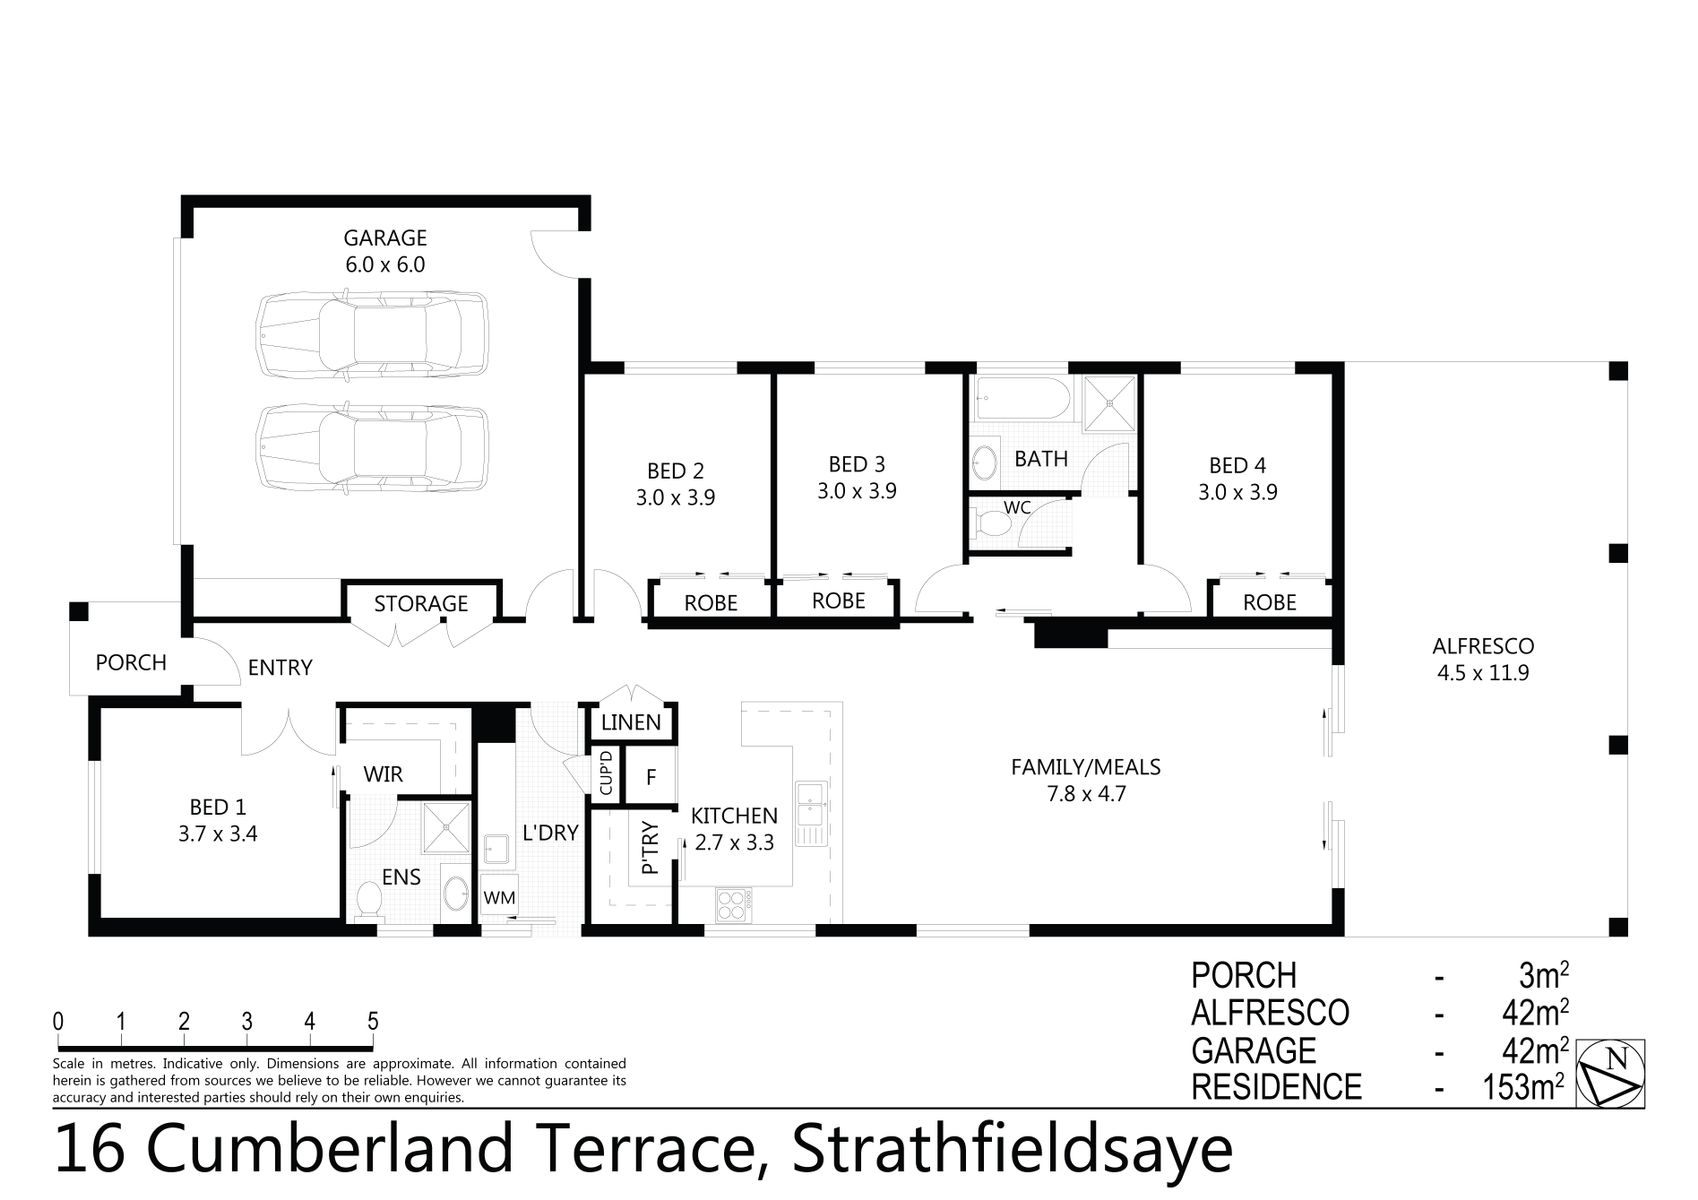 16 Cumberland Terrace, Strathfieldsaye (09 JANUARY 2018) 153sqm